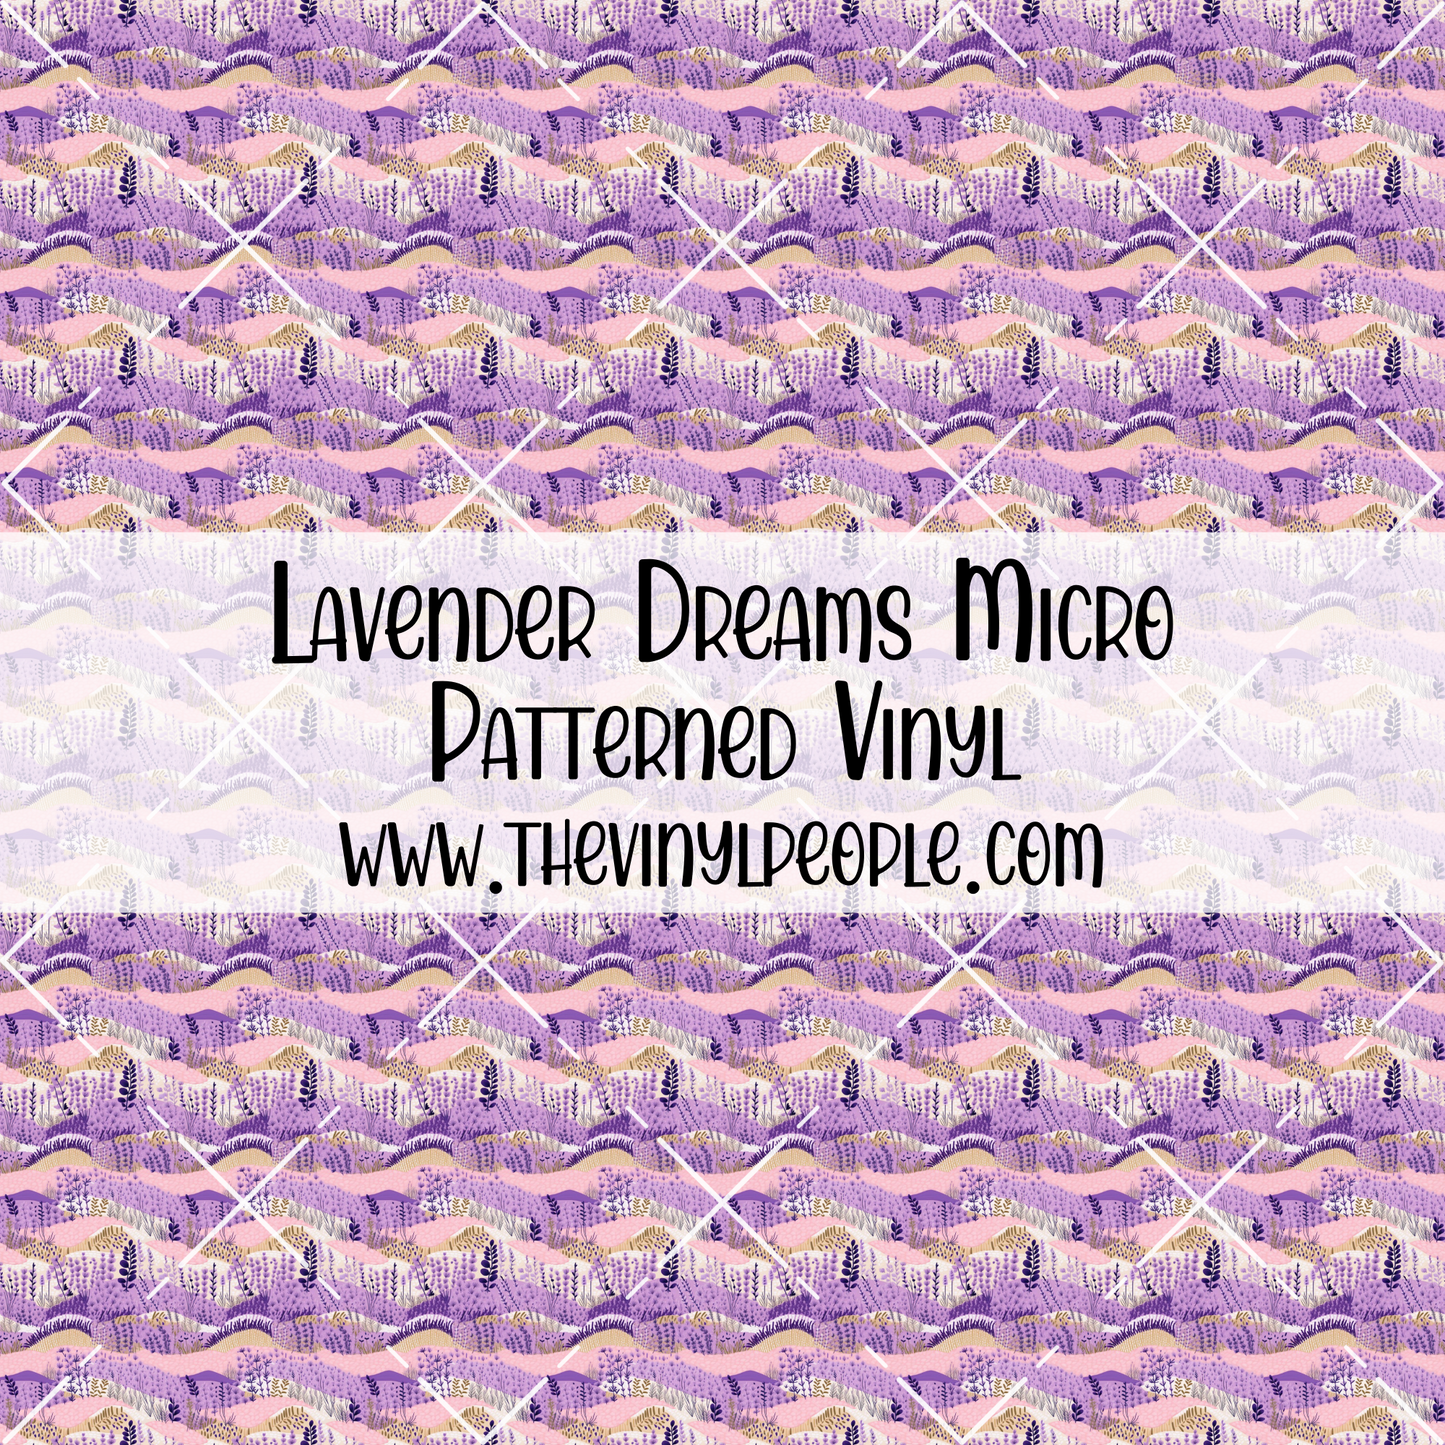 Lavender Dreams Patterned Vinyl